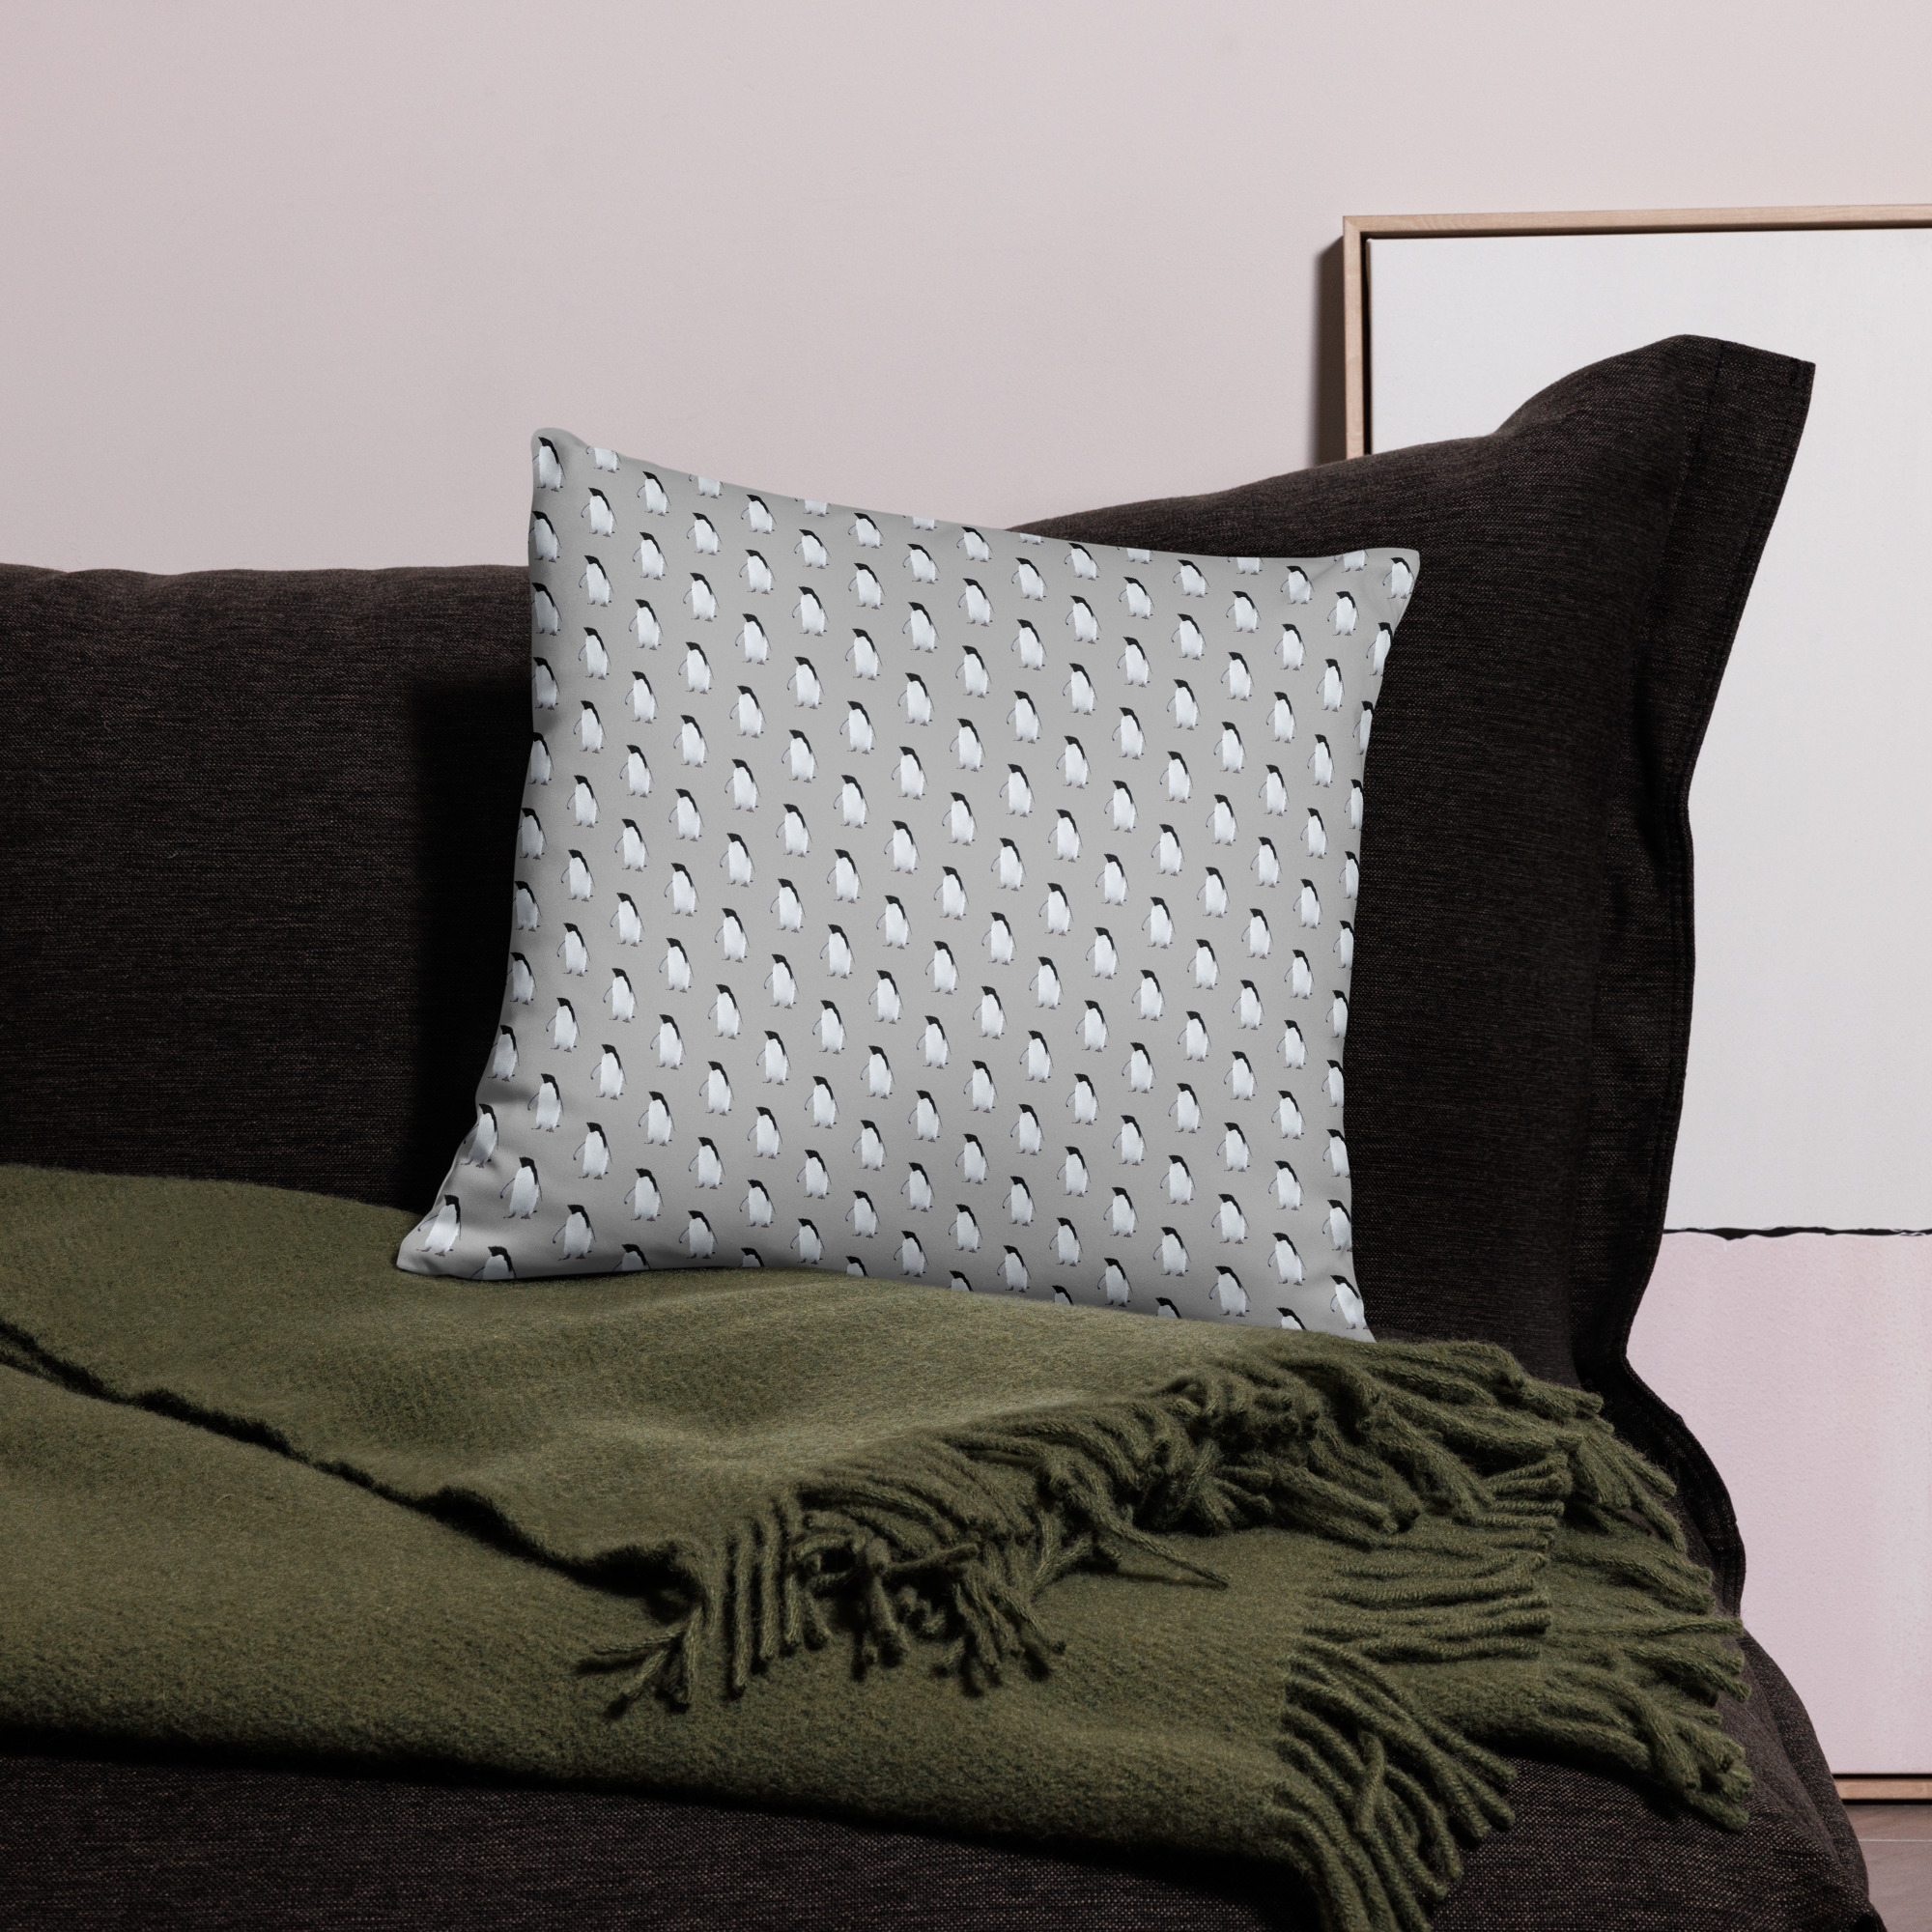 Adelie Penguin patterned Pillow